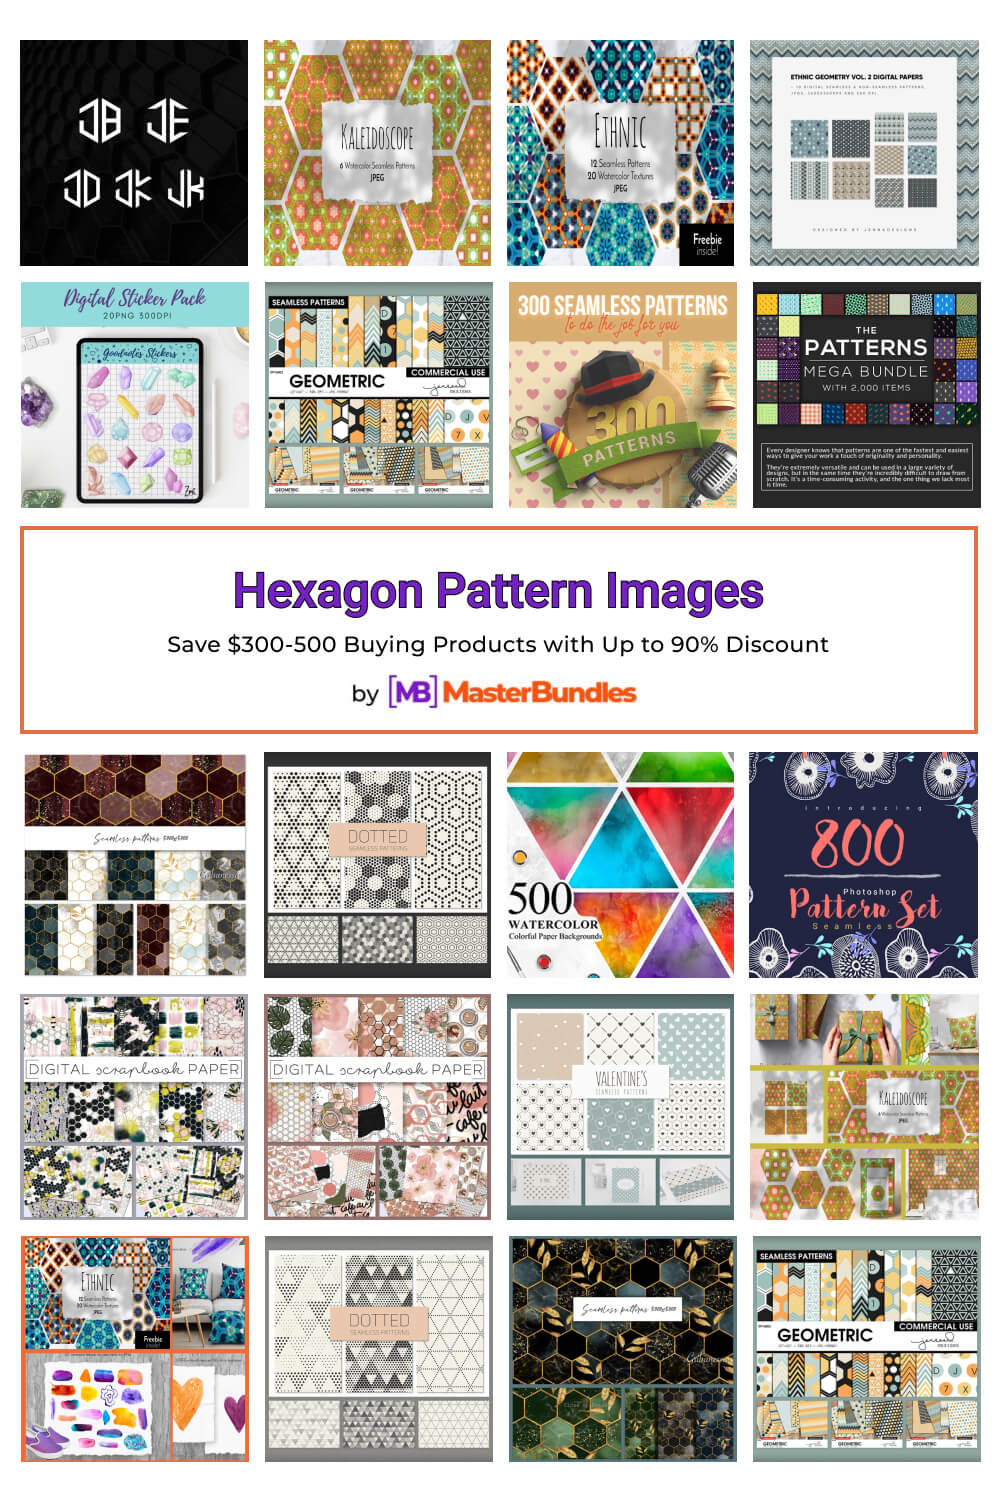 hexagon pattern images pinterest image.